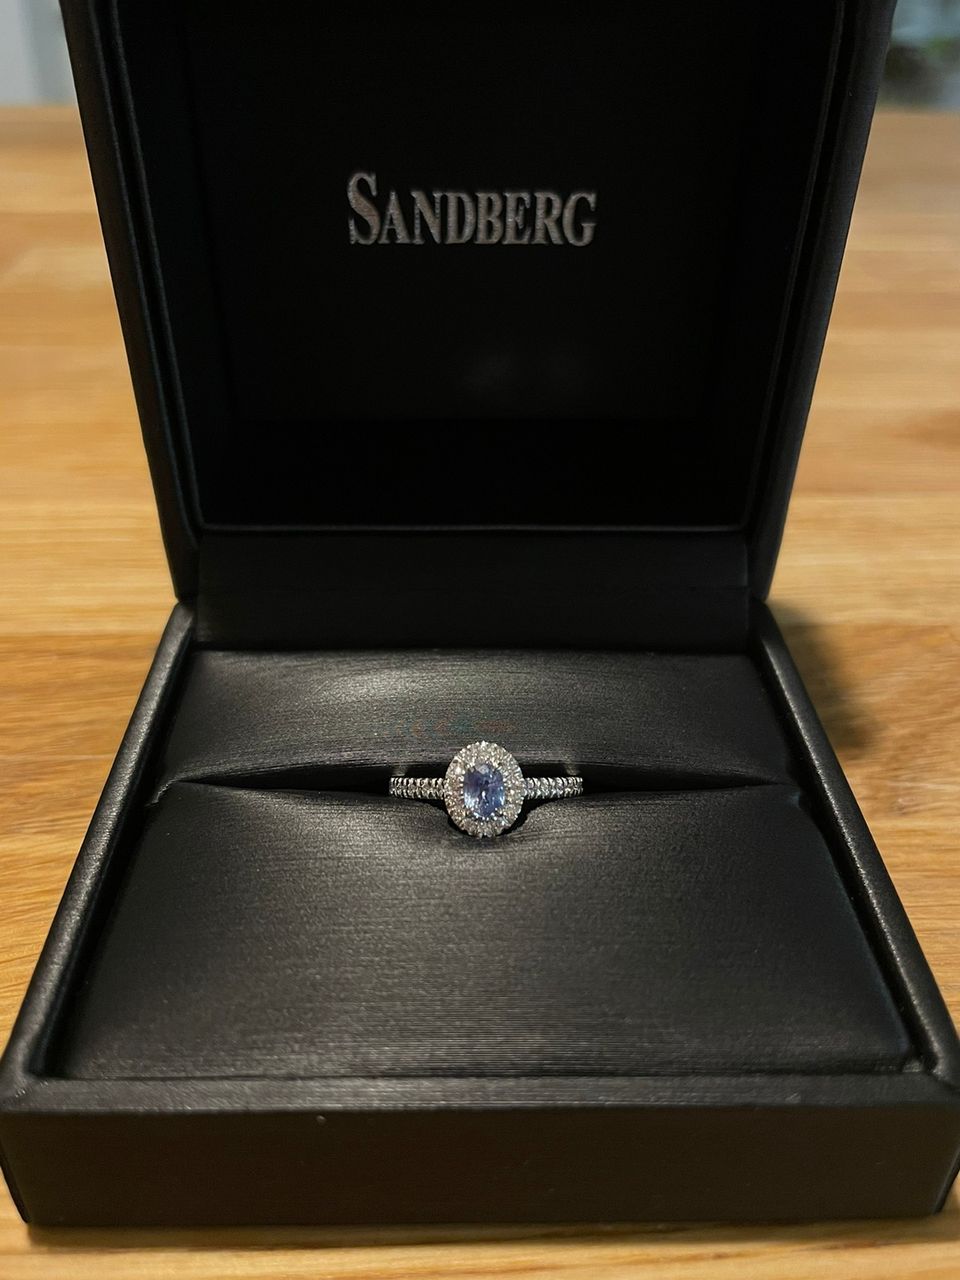 Sandberg Toivomuslähde V-850w valkokultainen timanttisormus, koko 17